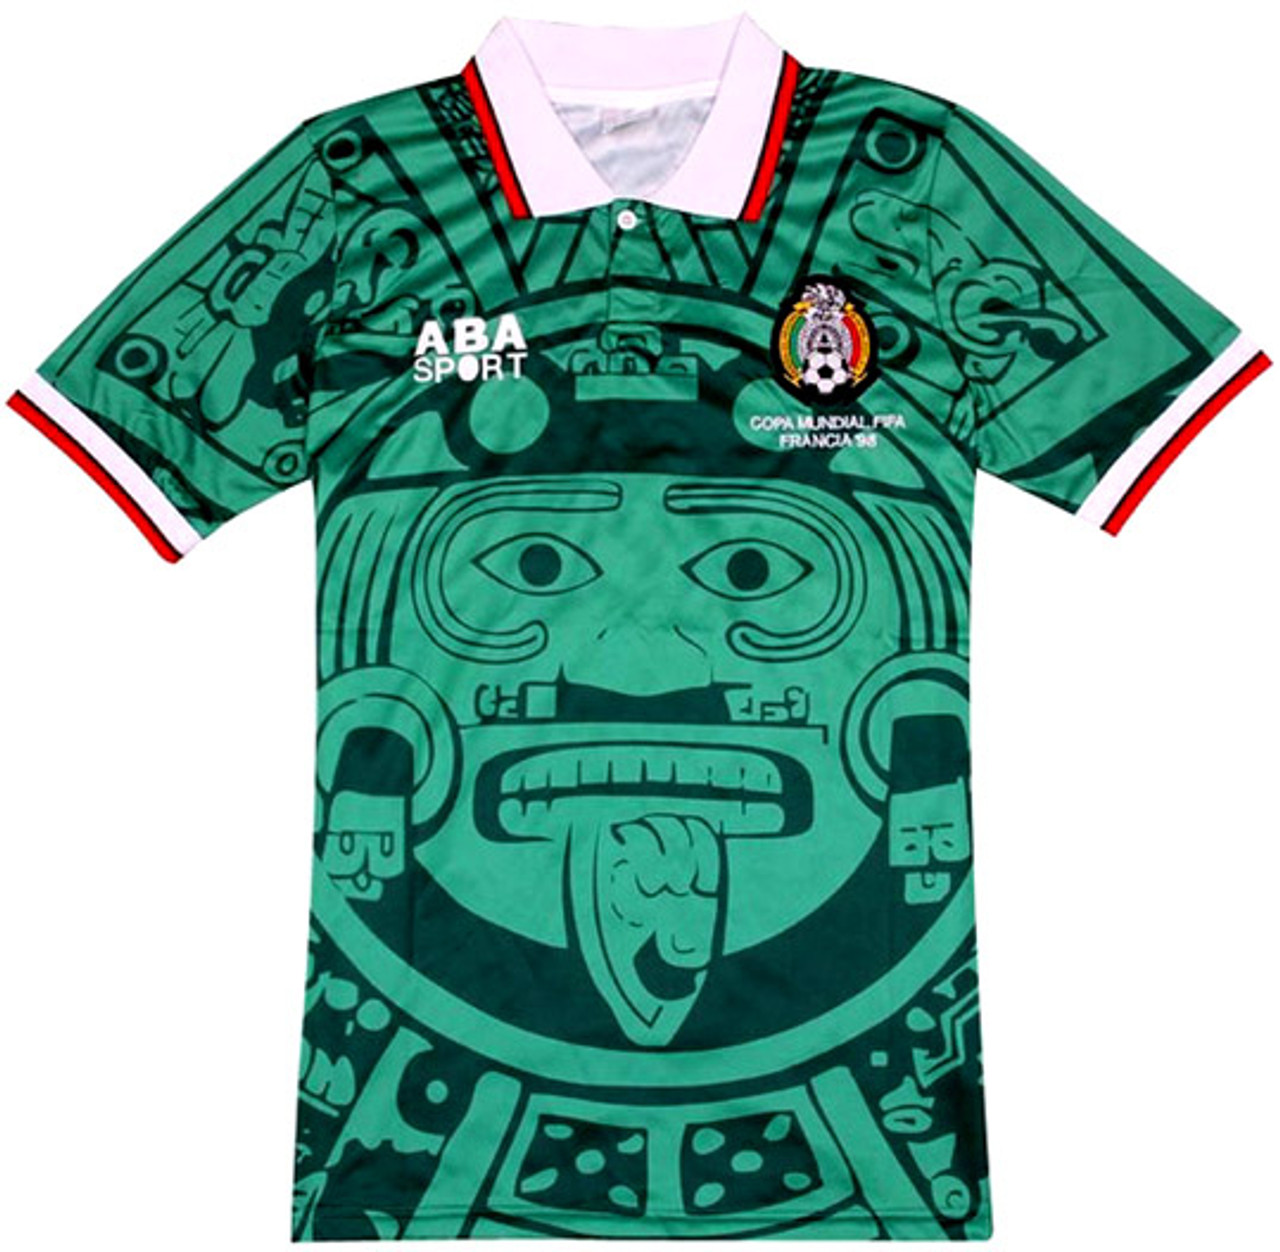 1998 mexico jersey original